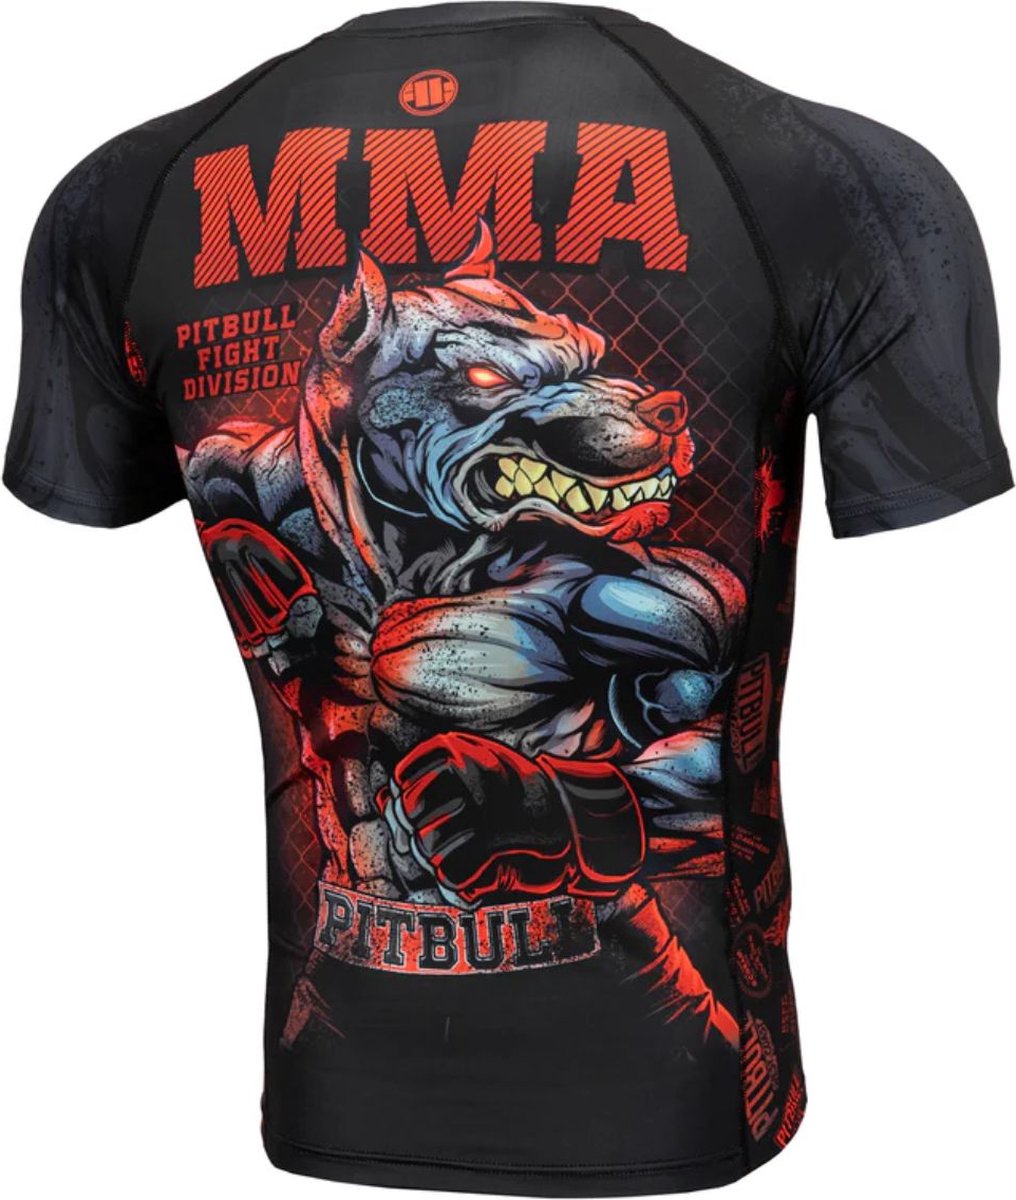 Pit Bull - Master of MMA - MMA Rashguard Short Sleeve - Vechtsport rashgaurd met korte mouwen - Compressie shirt - Zwart/ Rood - Maat M